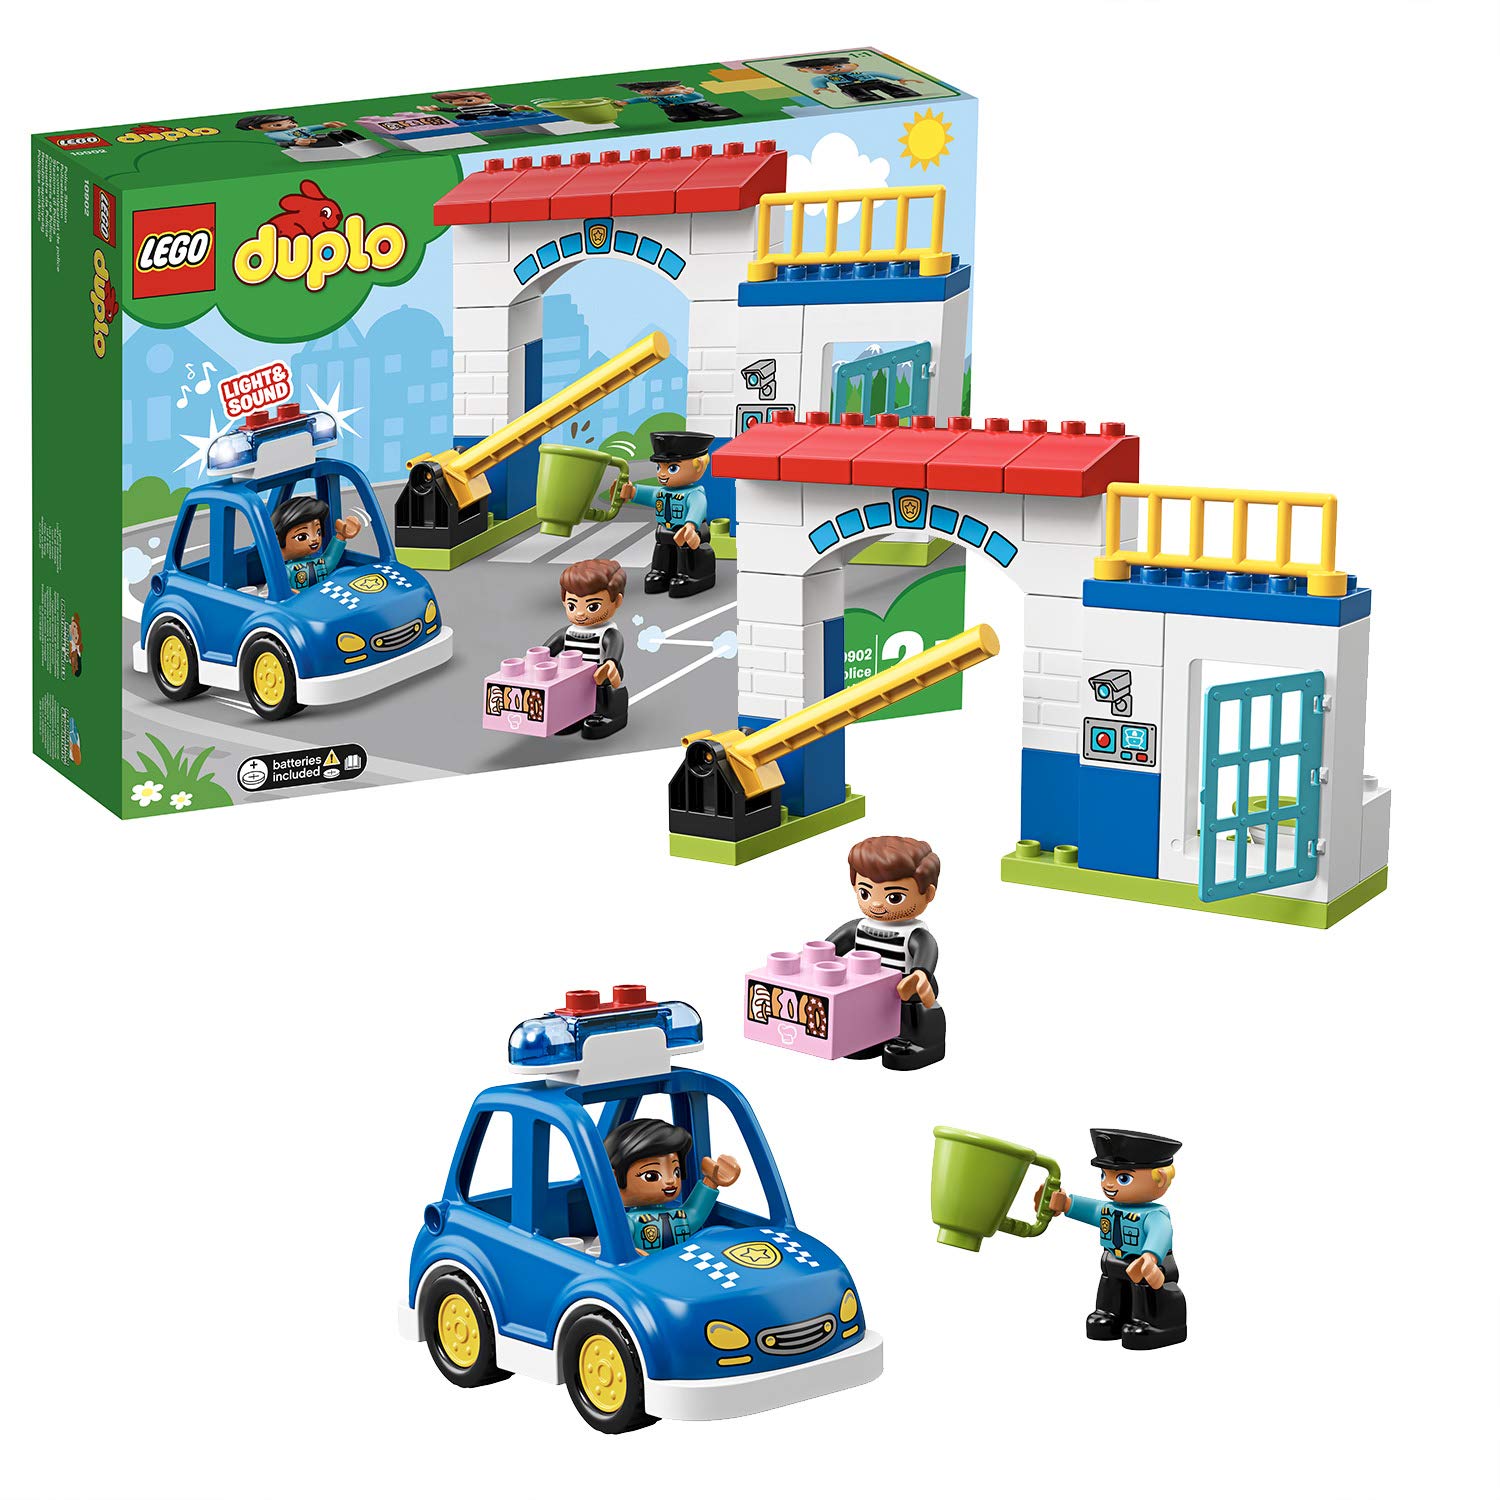 Lego Duplo 10902 Police Station